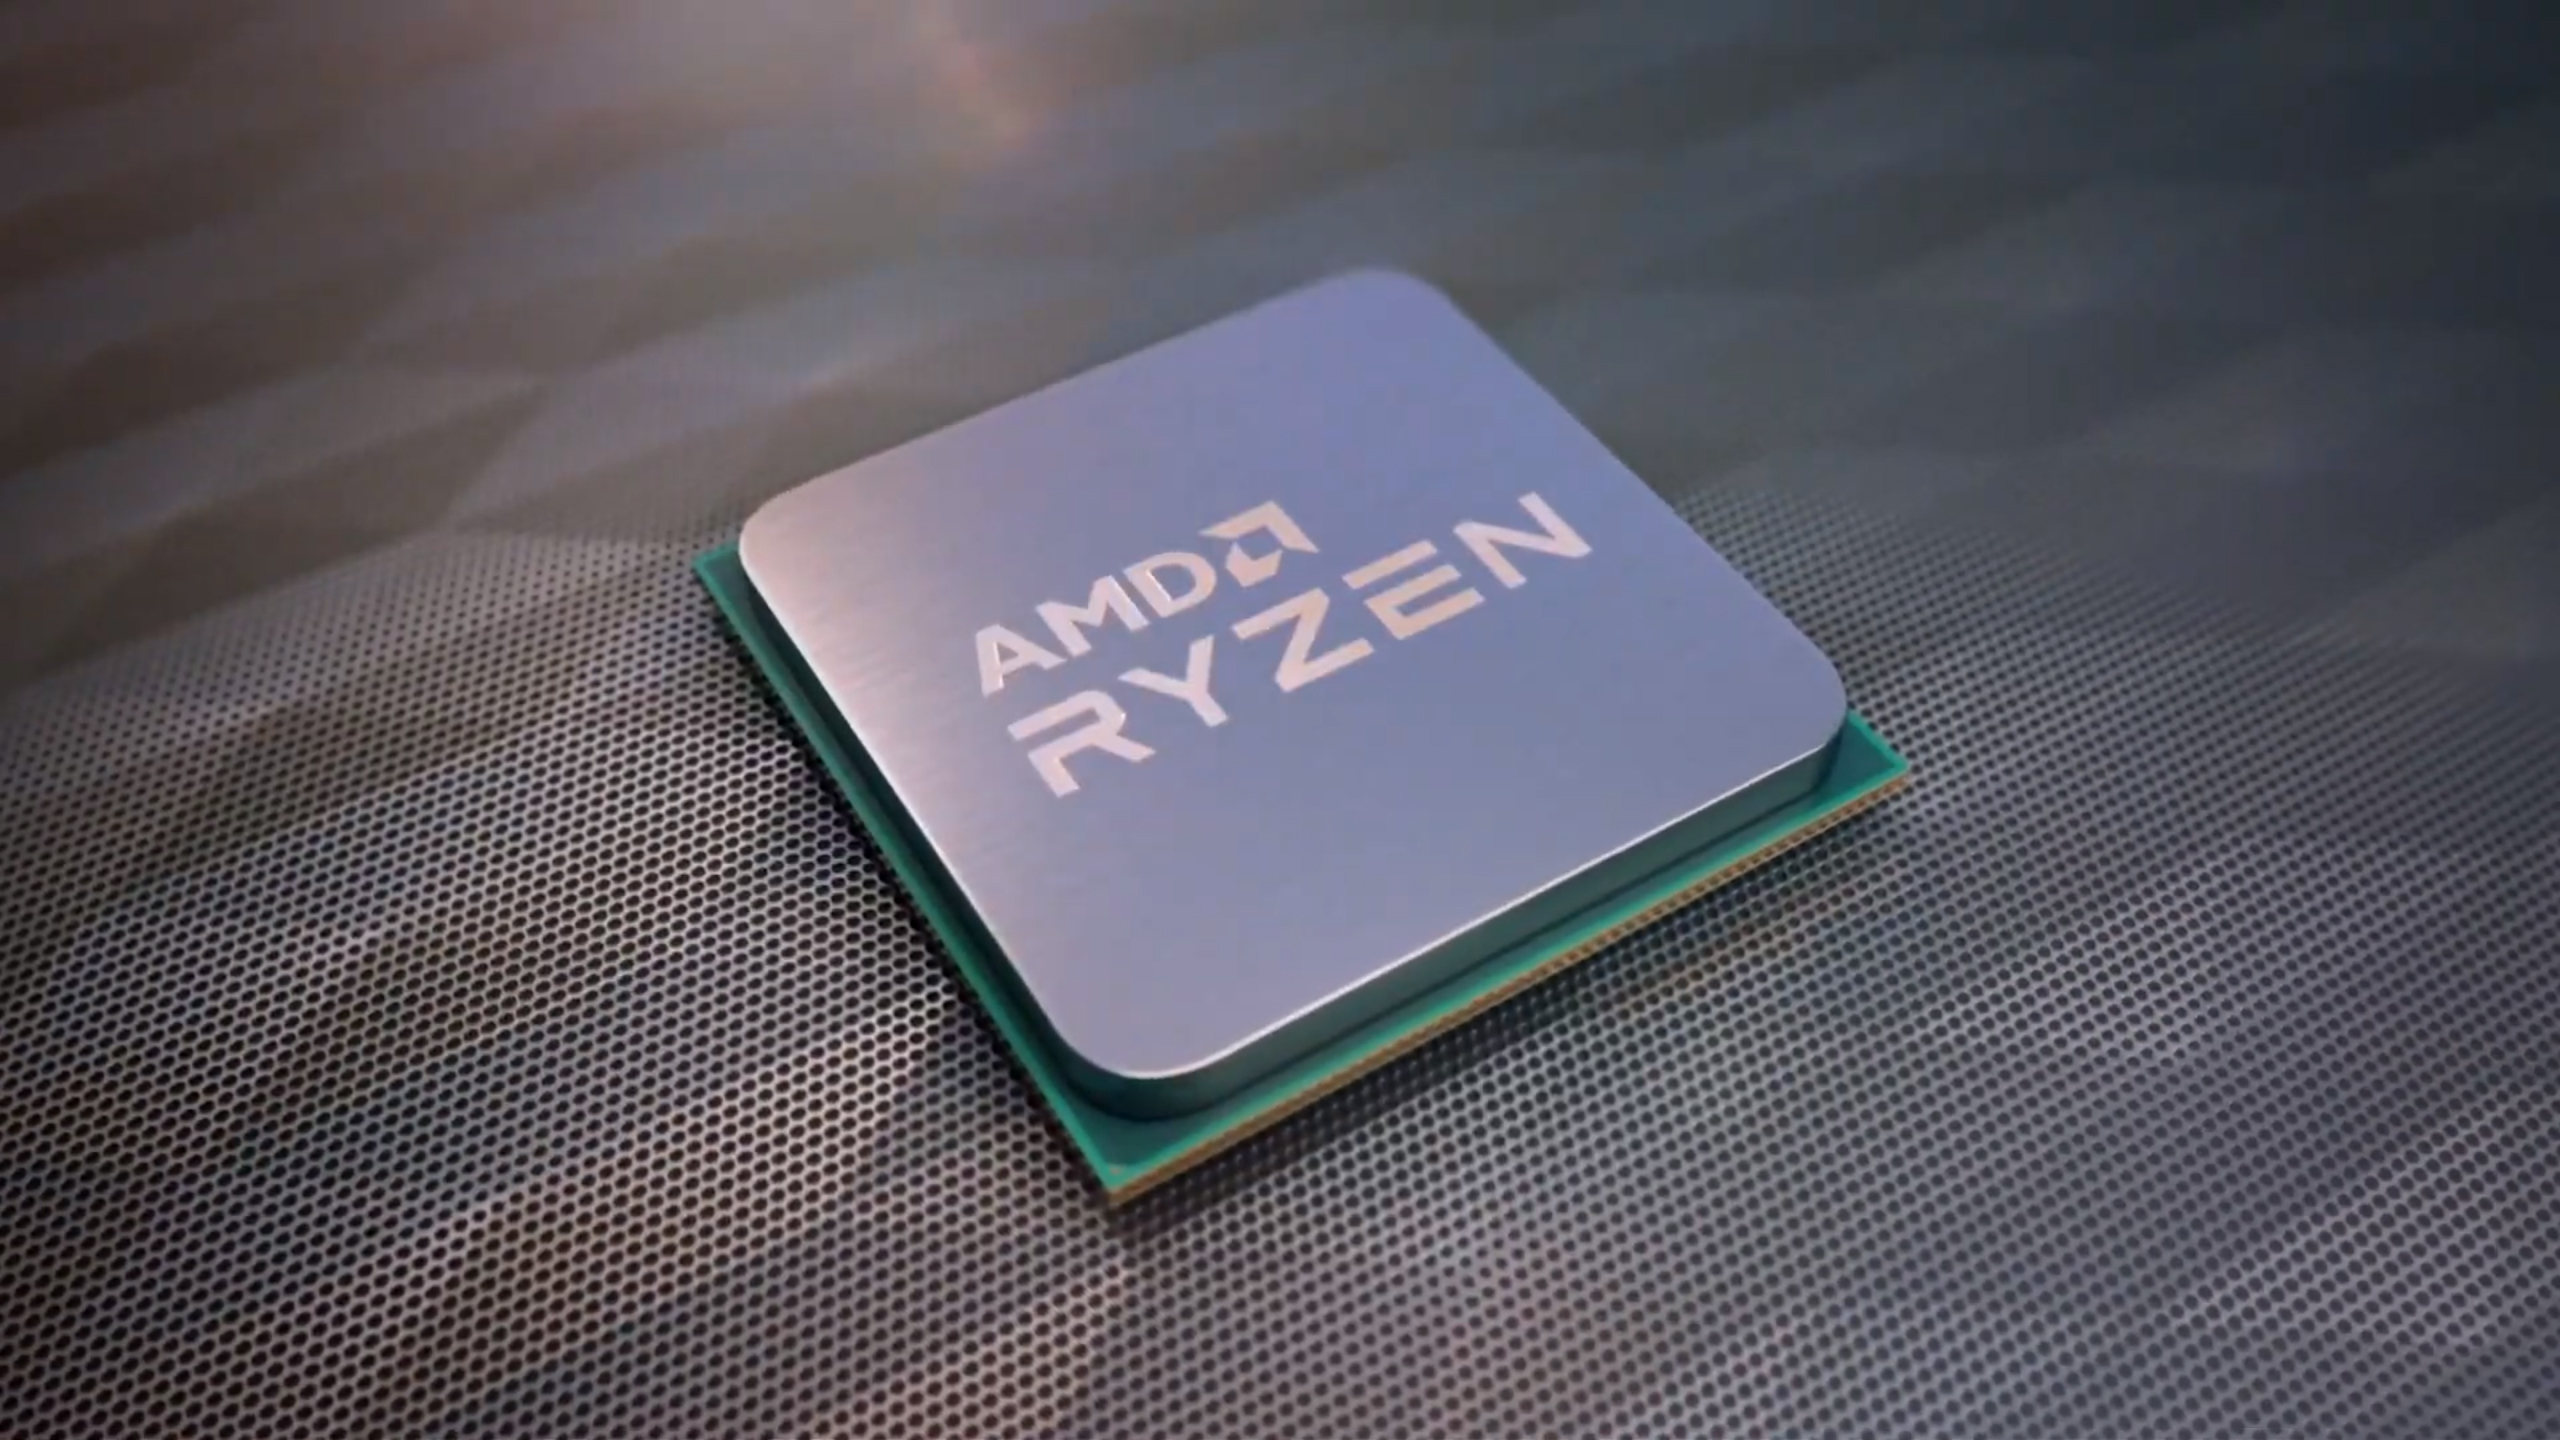 Early Reviews Of Amd Ryzen 5 5600x Show It Beating Intel Core I9 9900k Techradar